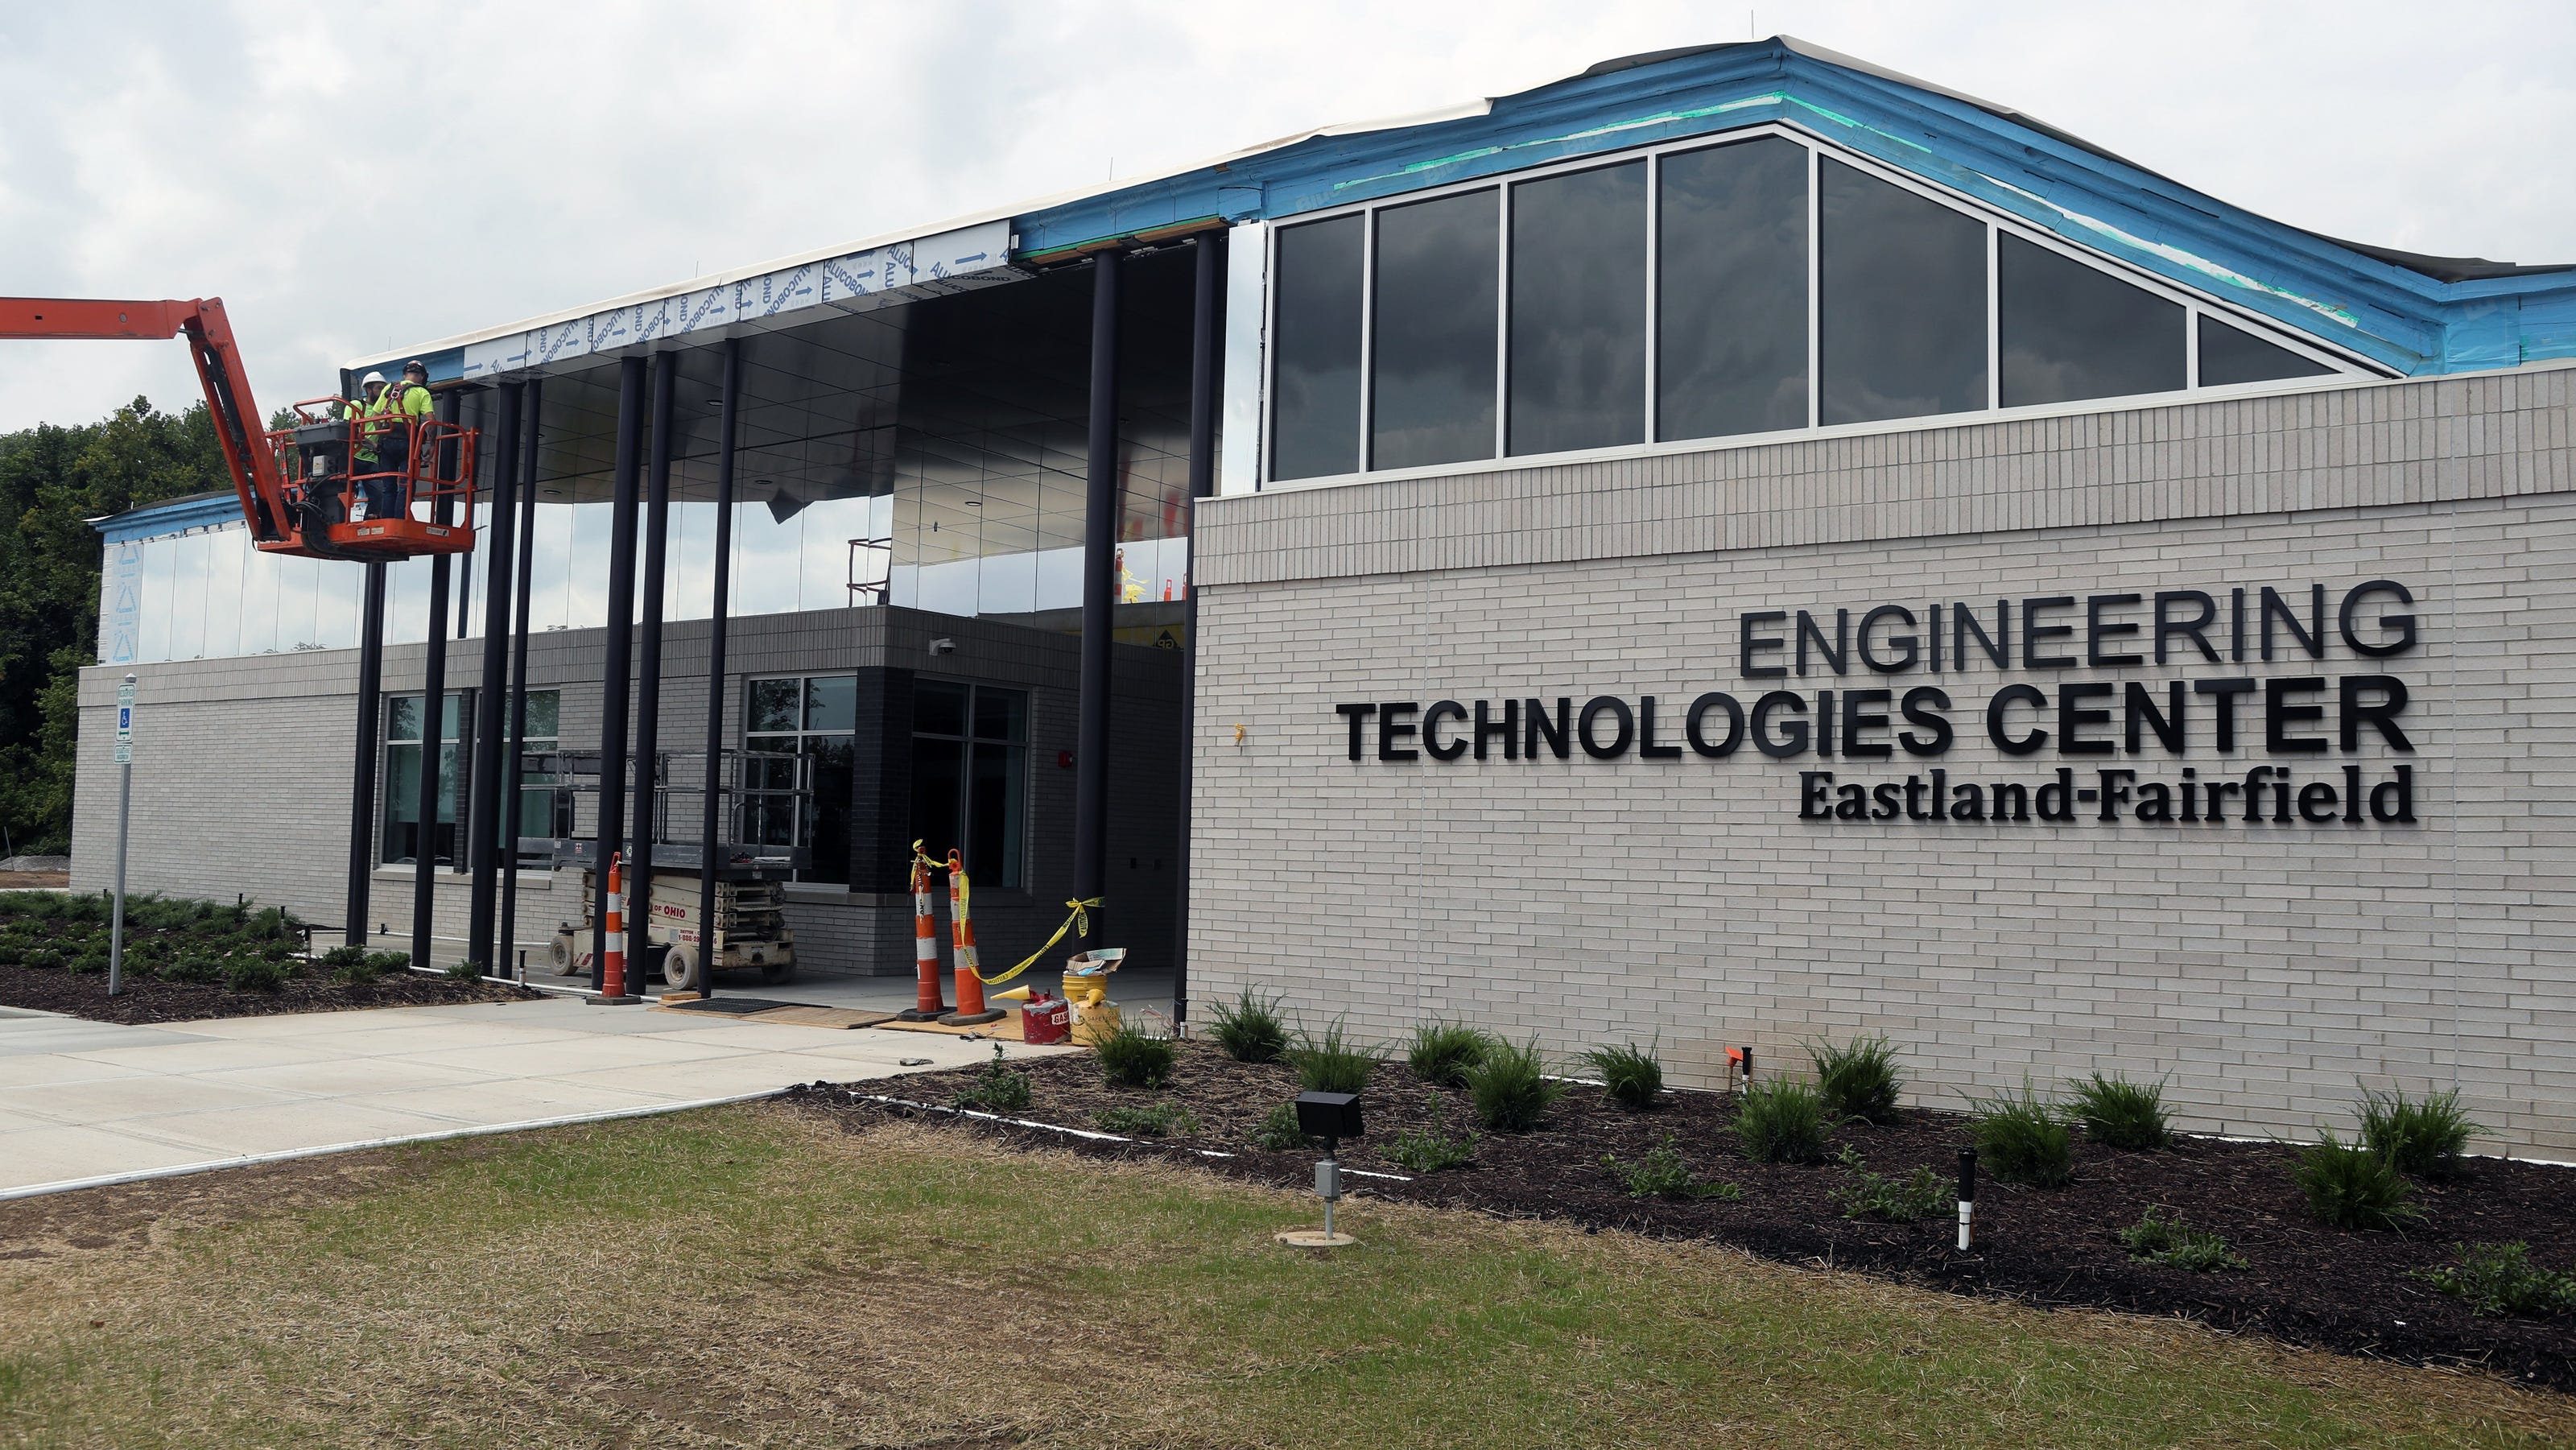 eastland-fairfield-career-technical-schools-opens-10m-engineering